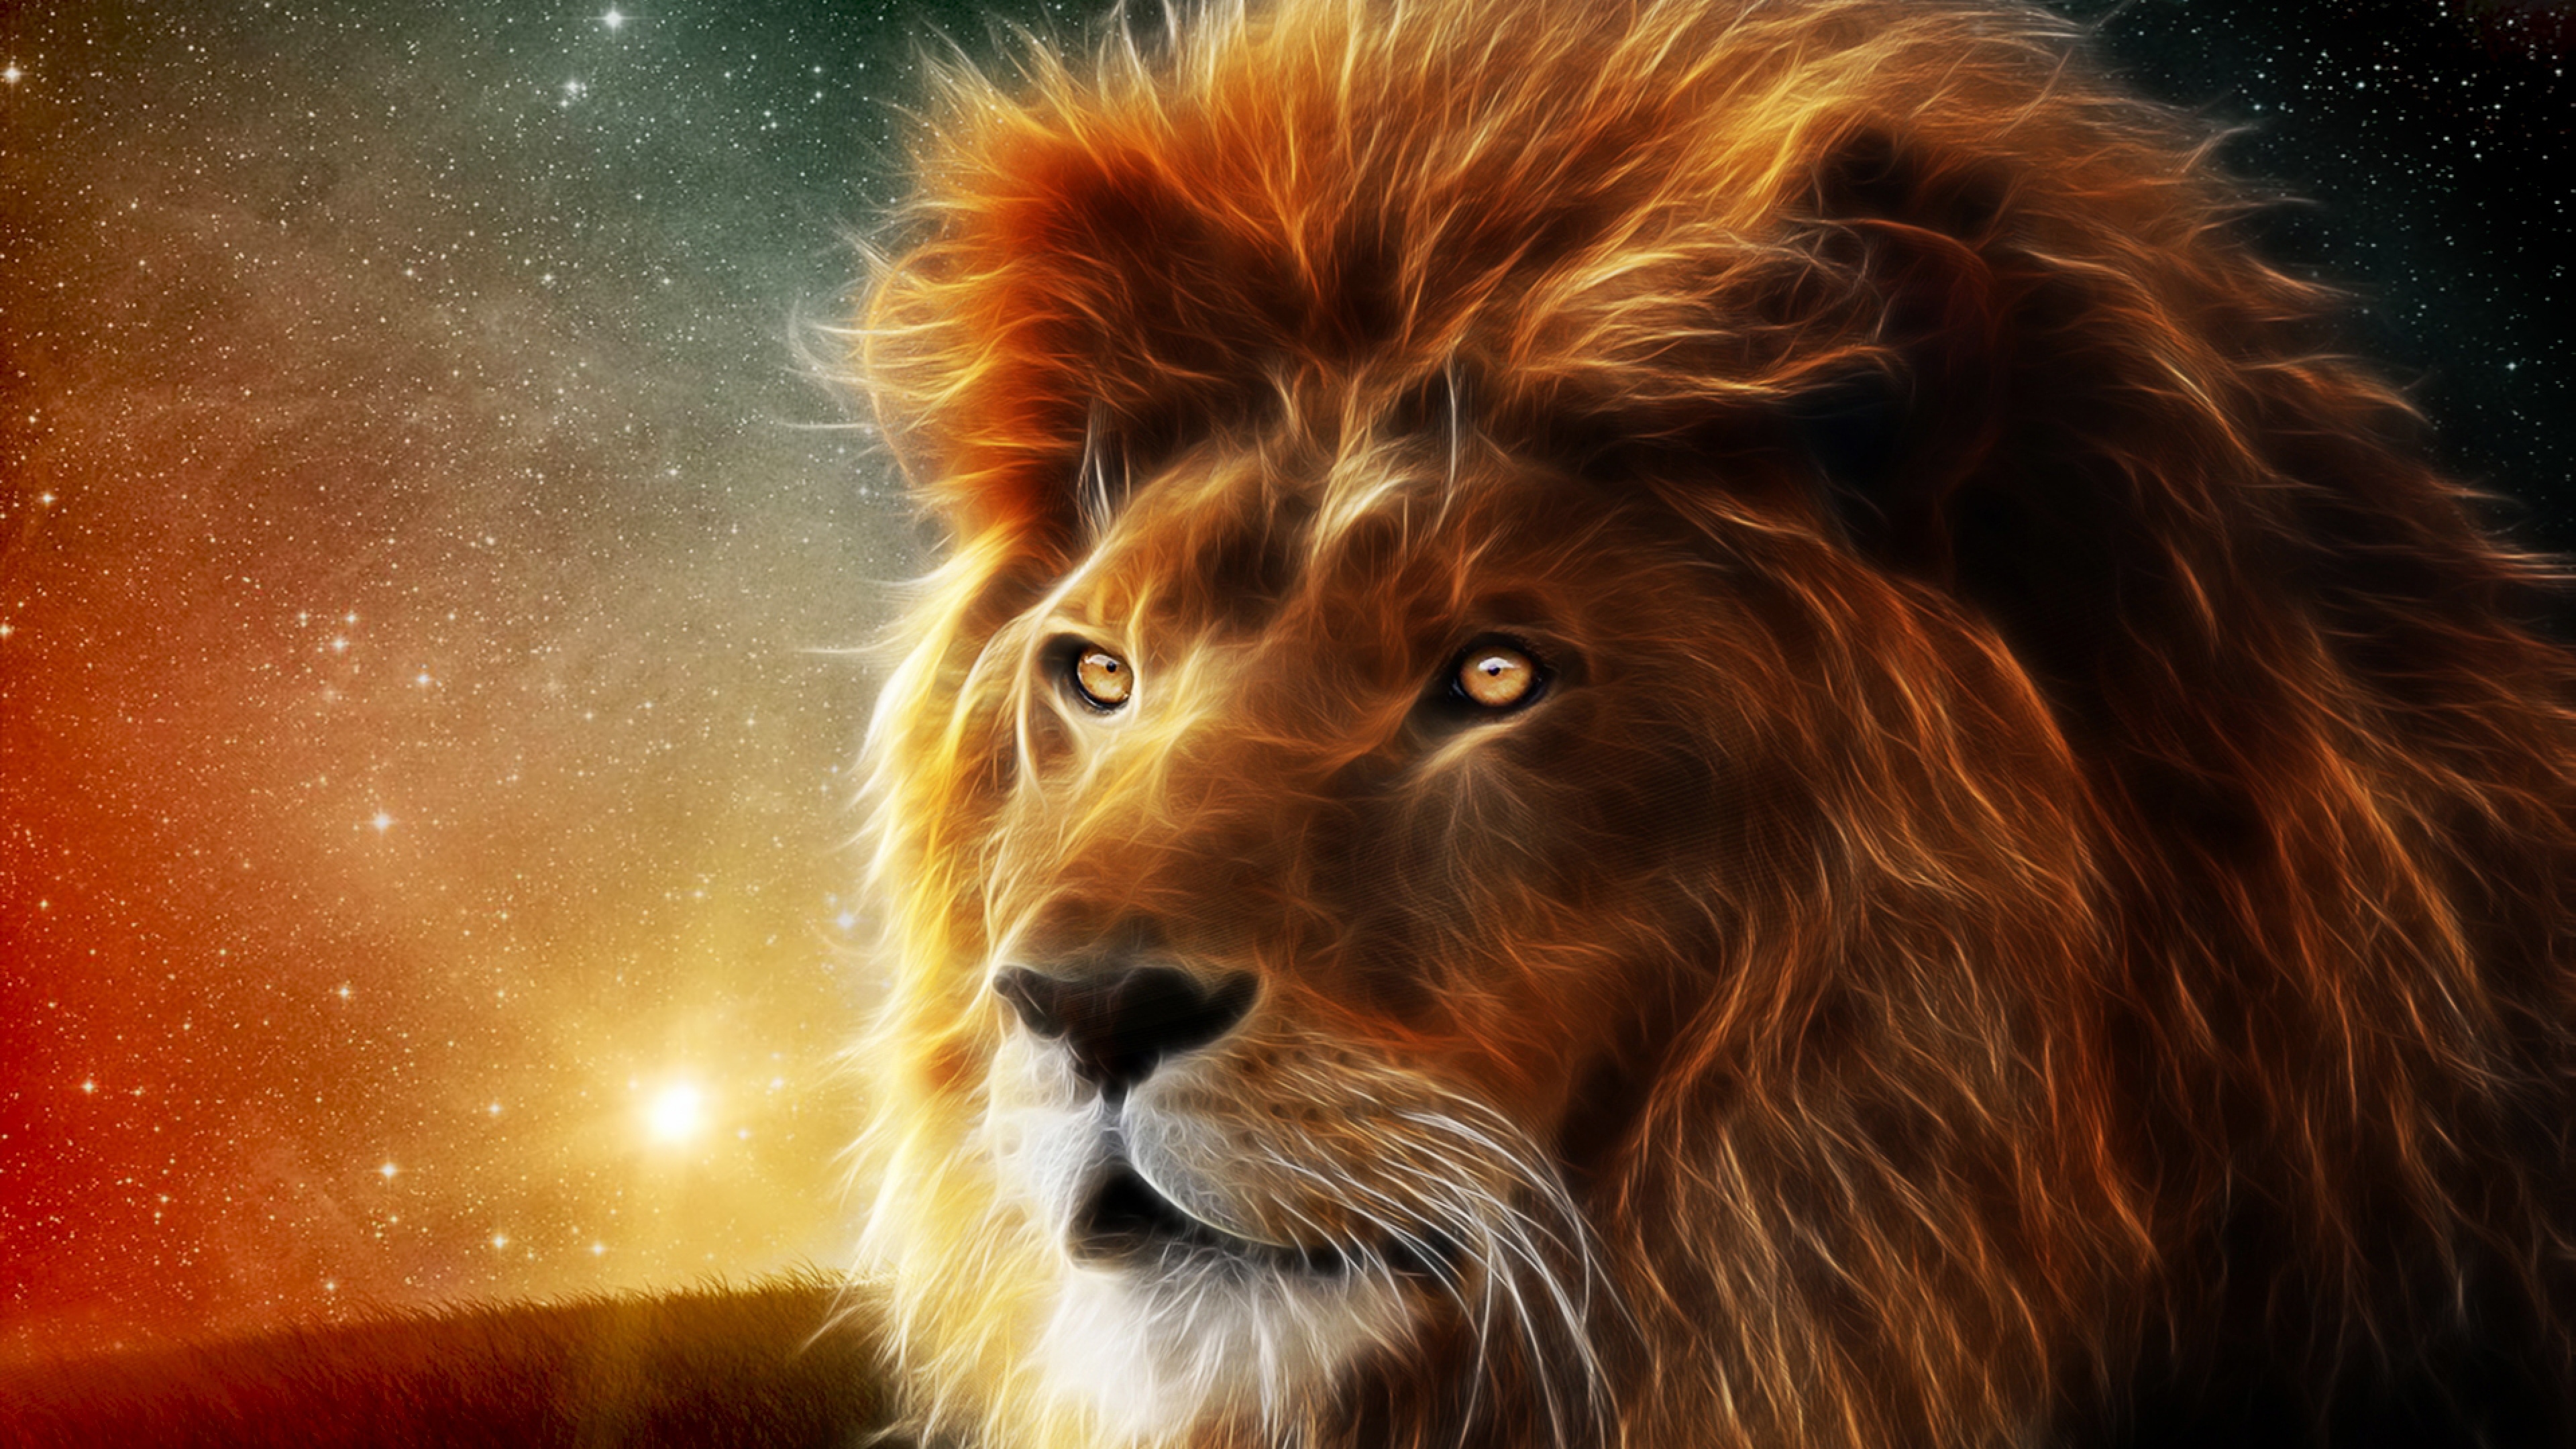 lion images download - Clip Art Library